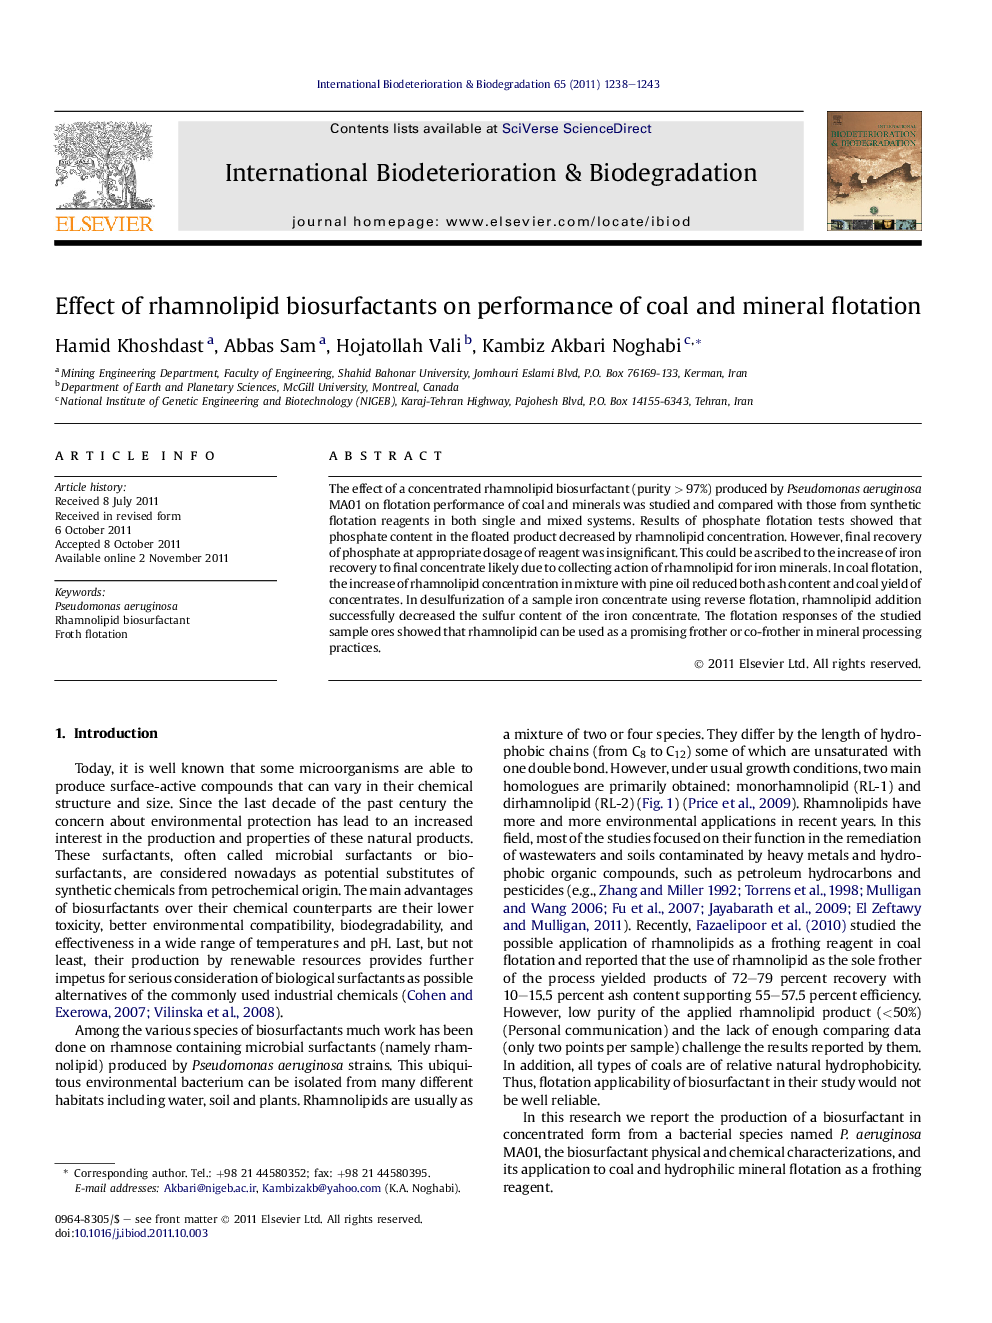 Effect of rhamnolipid biosurfactants on performance of coal and mineral flotation